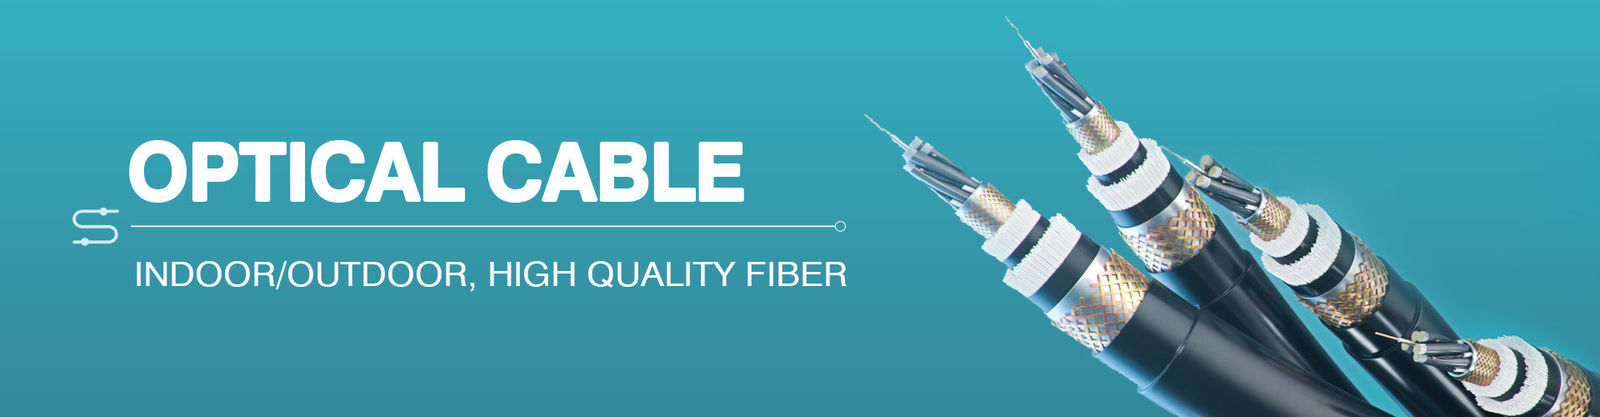 Cable de fibra óptica interior